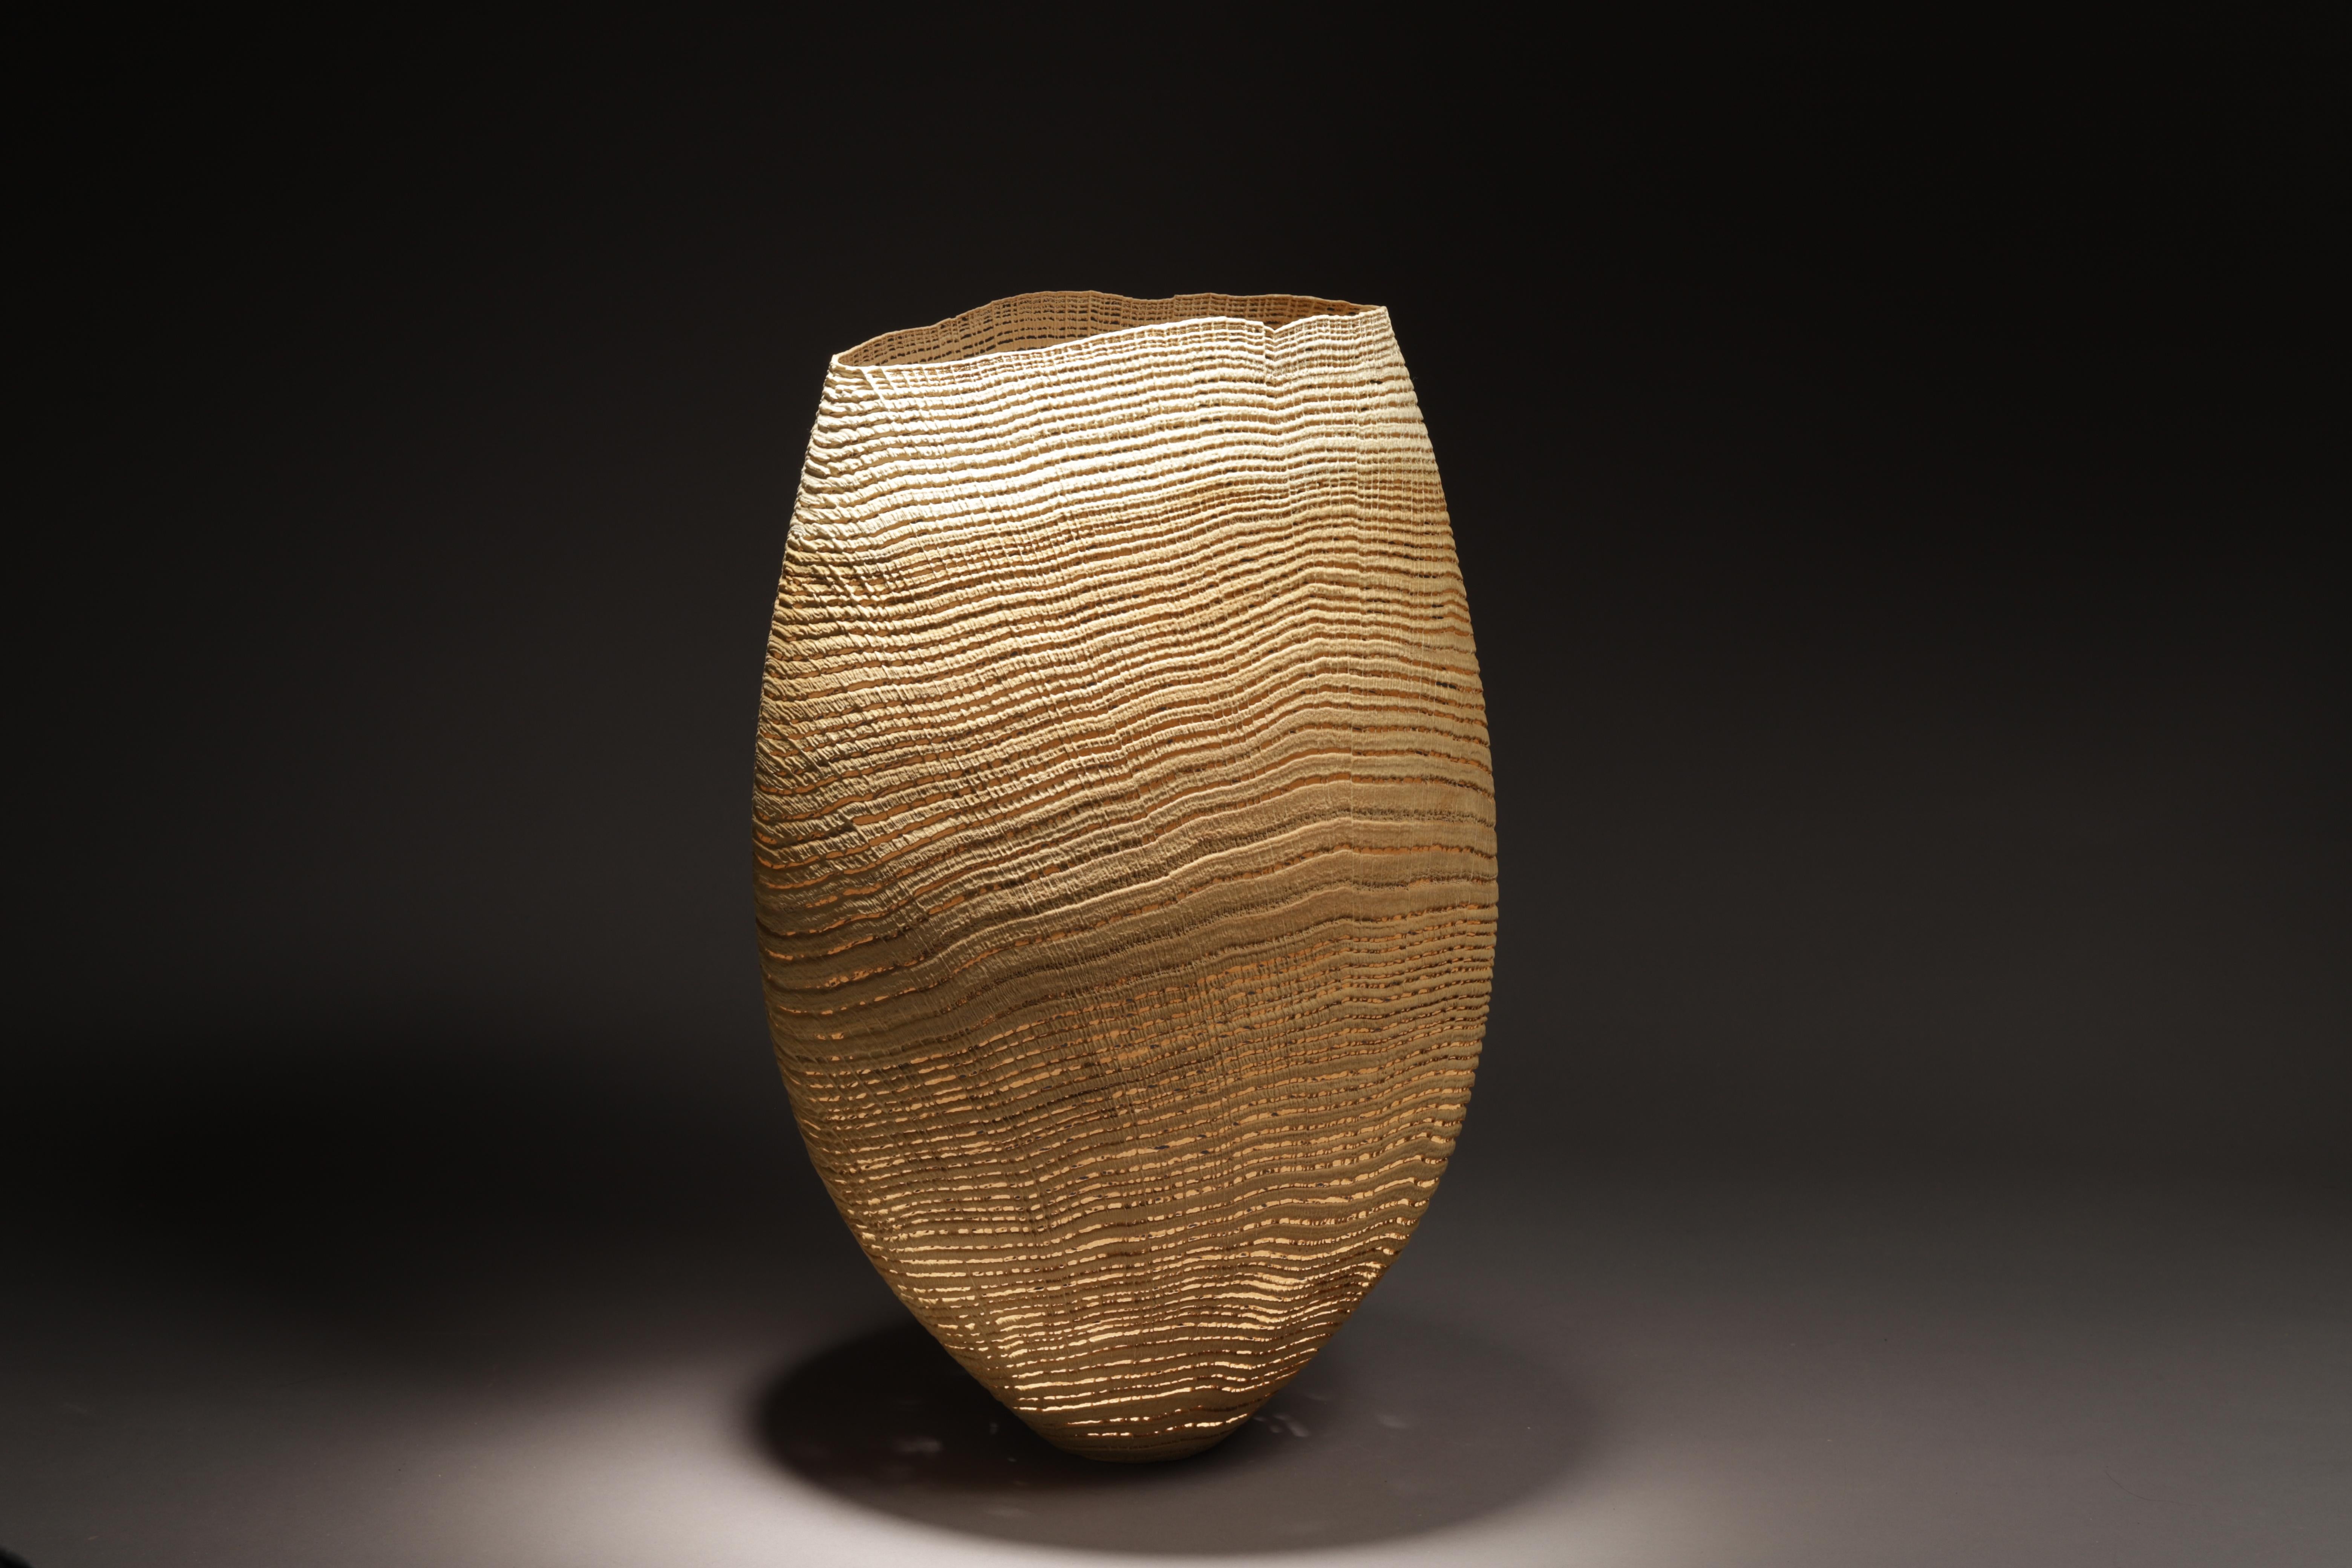 Natural beige color Vase Sculpture 1029 - Lathe-Turned & Sandblasted wood Oak - Contemporary Art by pascal oudet